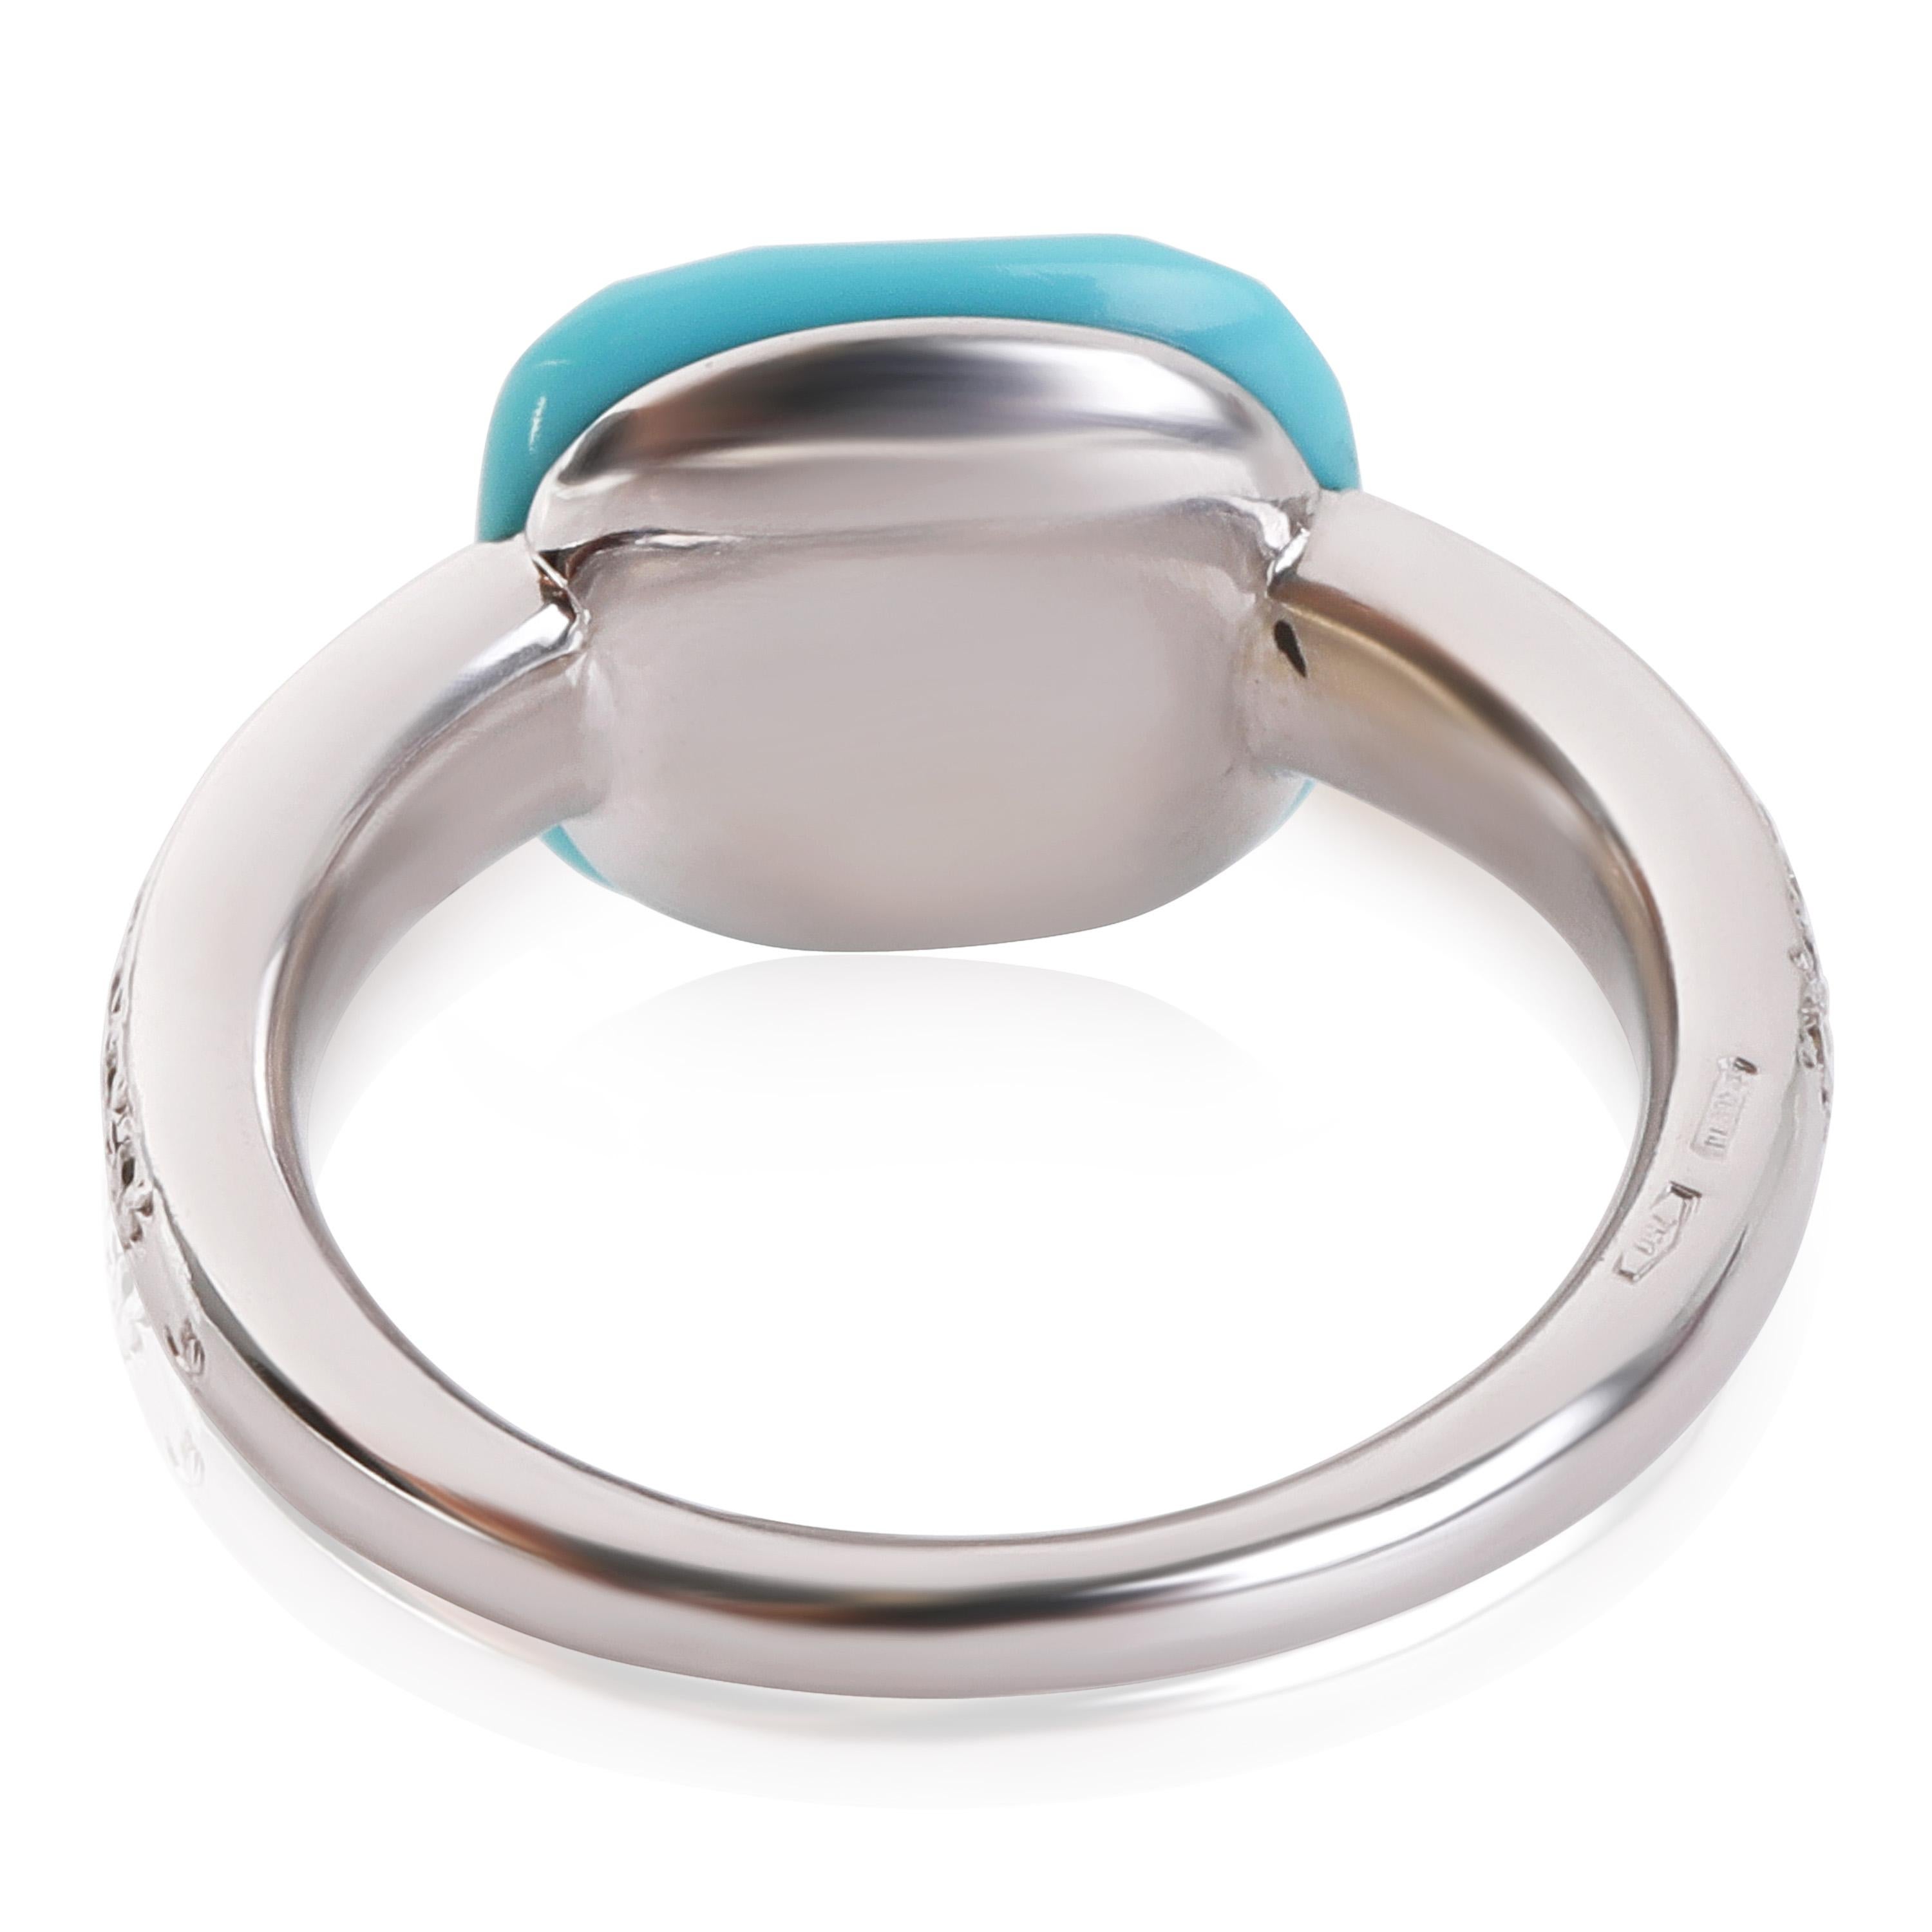 Pomellato Capri Turquoise Diamond Gemstone Ring in 18k White Gold 0.26 CTW

PRIMARY DETAILS
SKU: 117125
Listing Title: Pomellato Capri Turquoise Diamond Gemstone Ring in 18k White Gold 0.26 CTW
Condition Description: Retails for 4350 USD. In